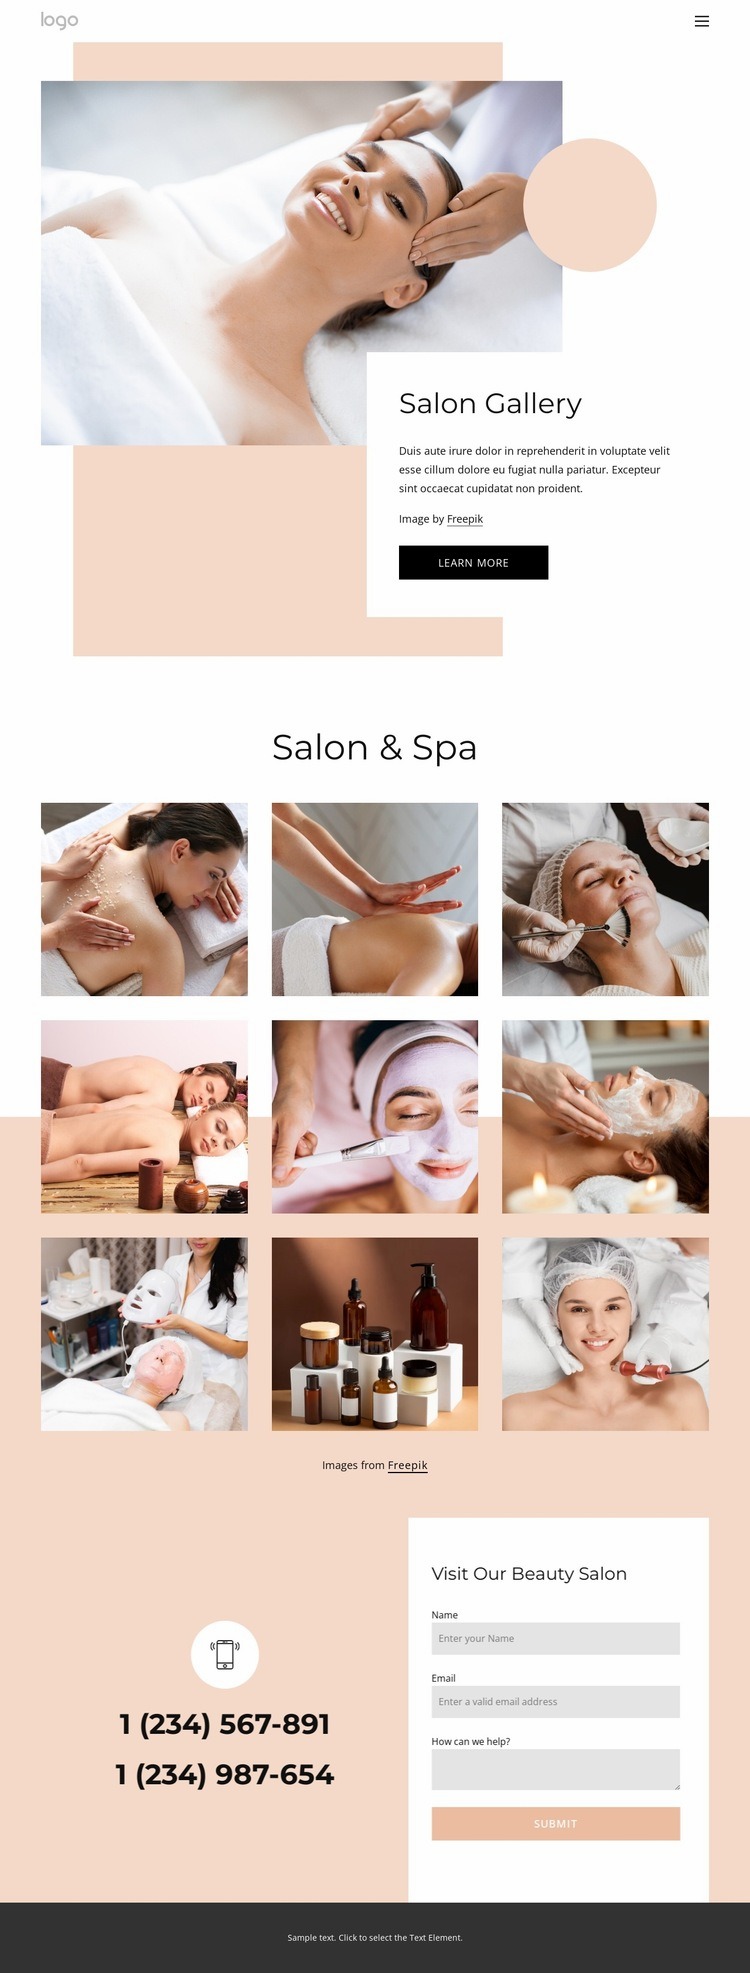 Beauty salon gallery Homepage Design